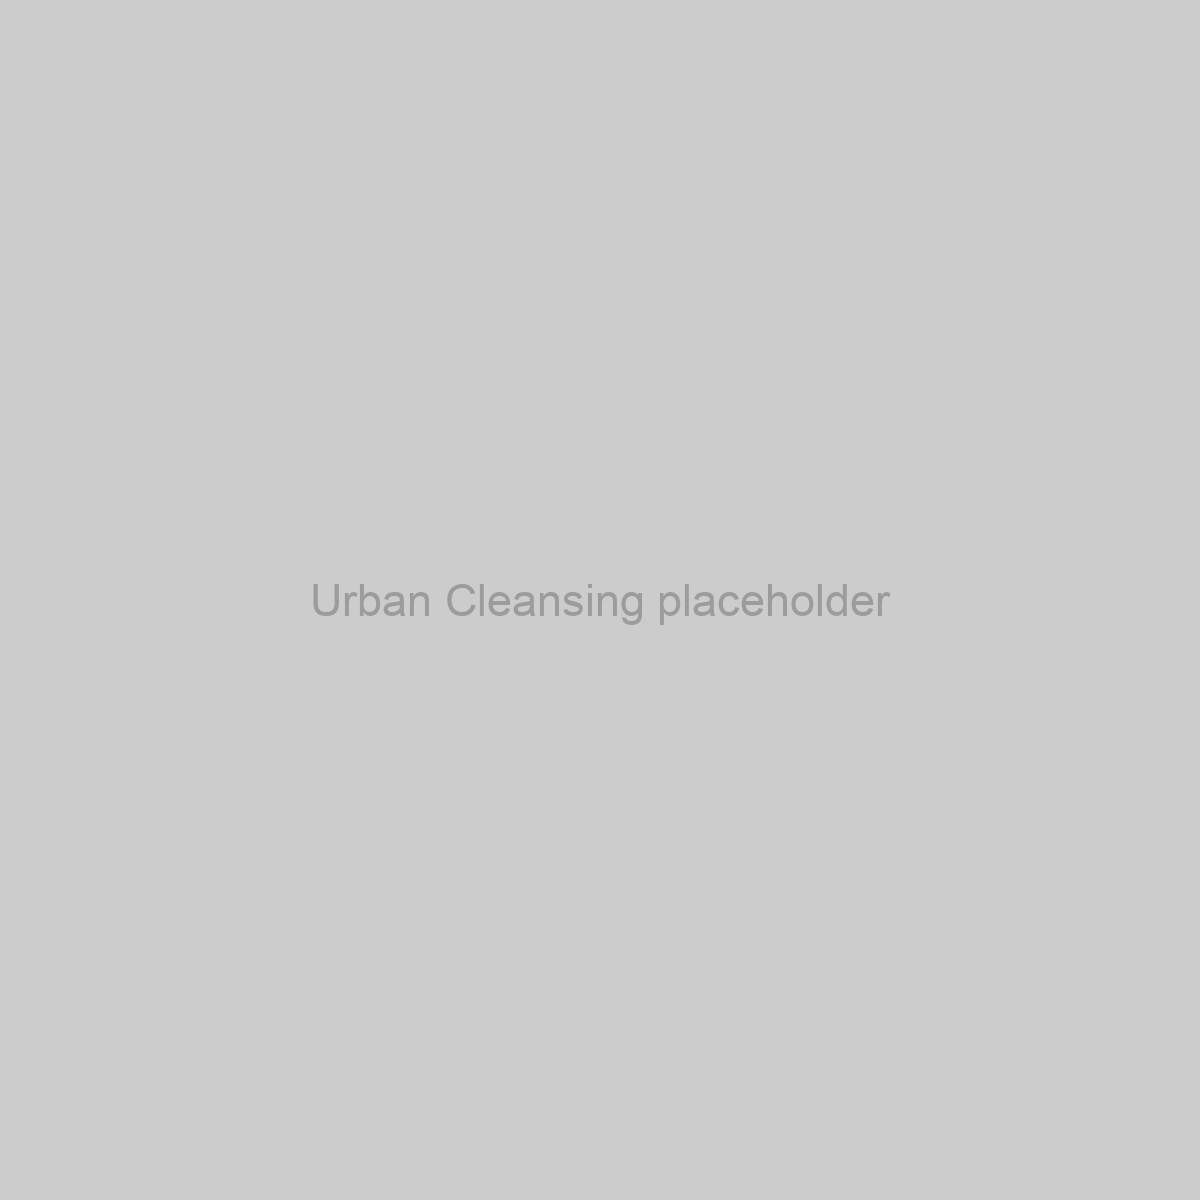 Urban Cleansing Placeholder Image